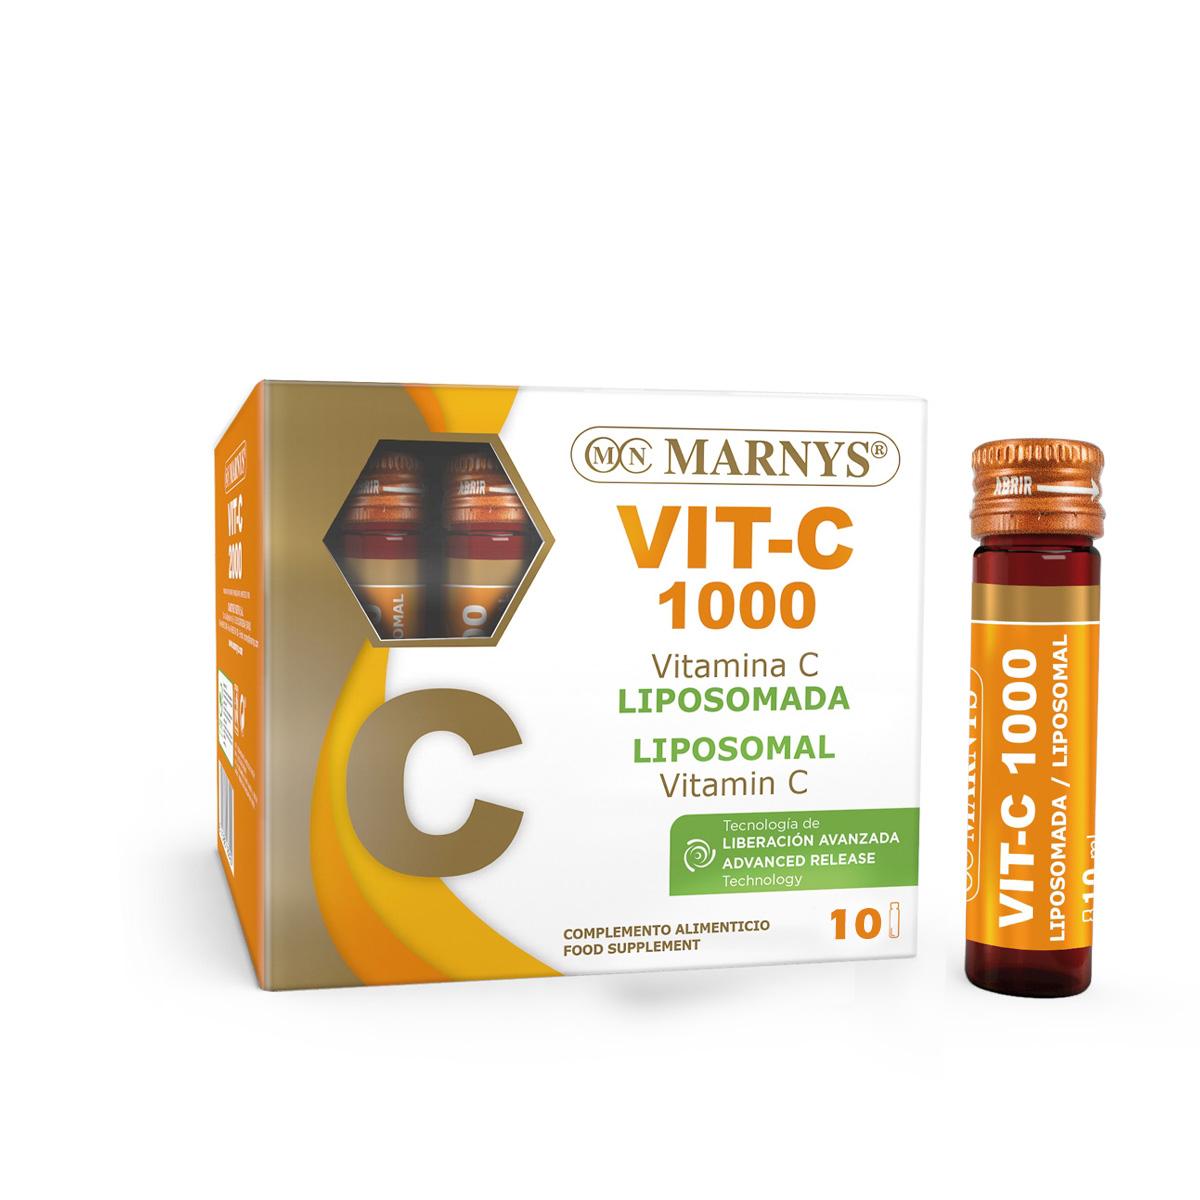 MARNYS Liposomalni vitamin C u ampulama 10/1 124160